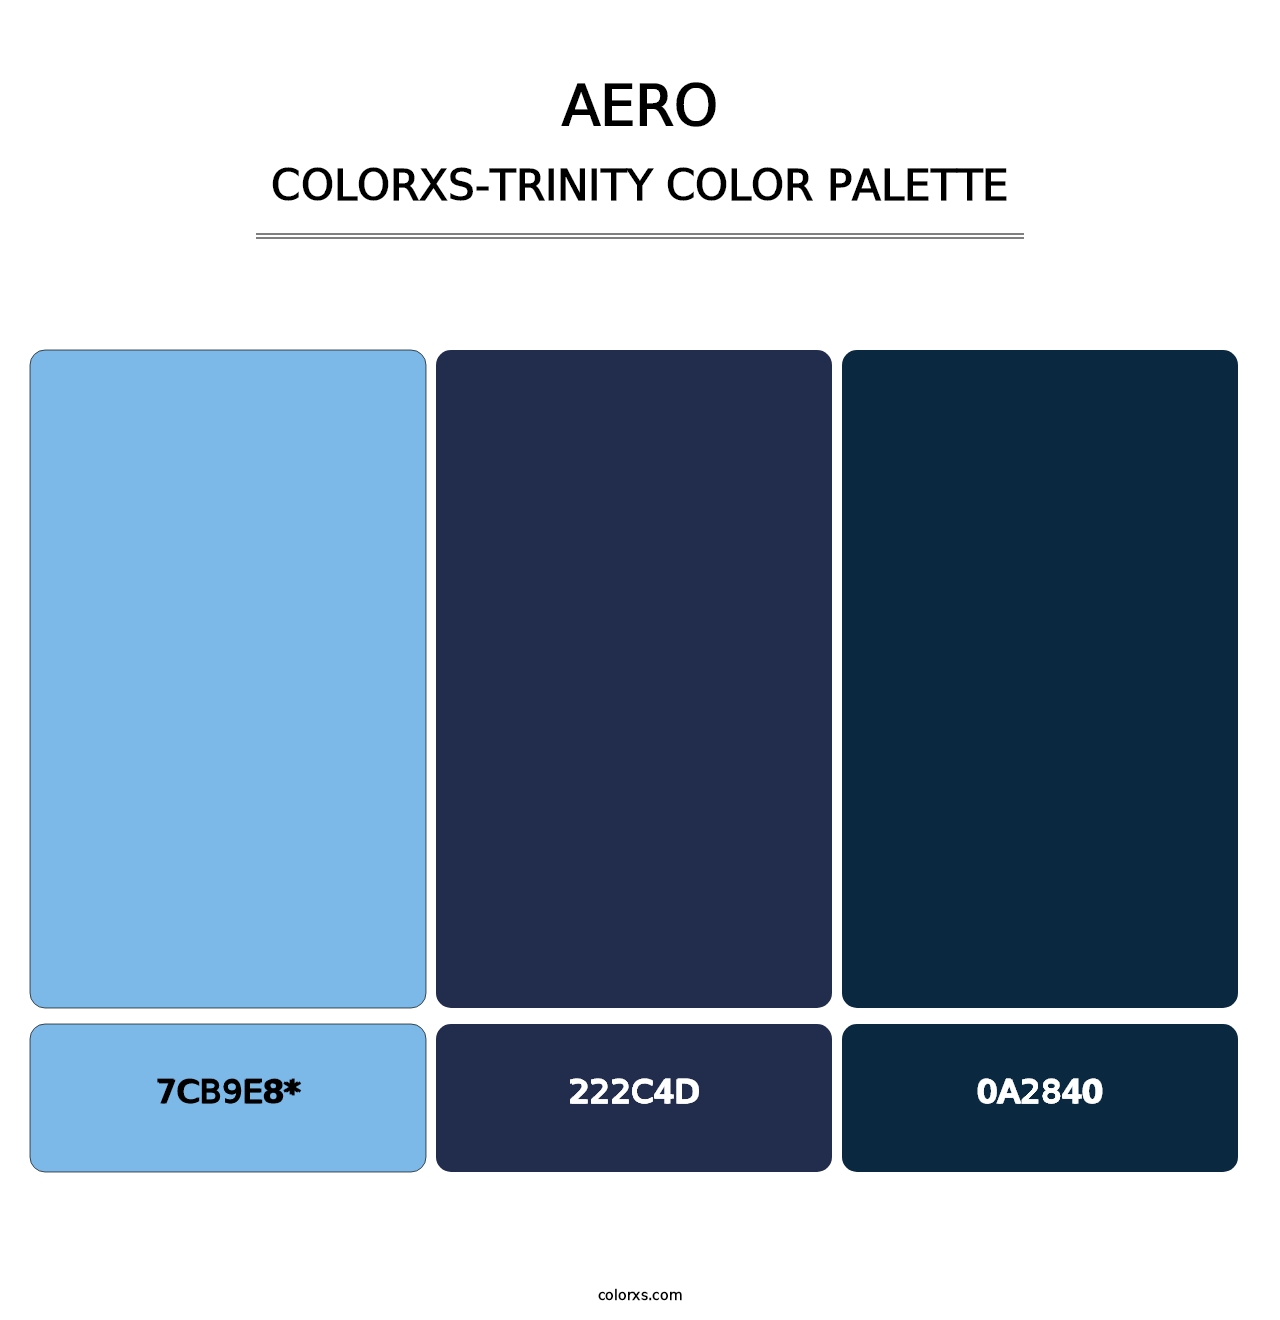 Aero - Colorxs Trinity Palette